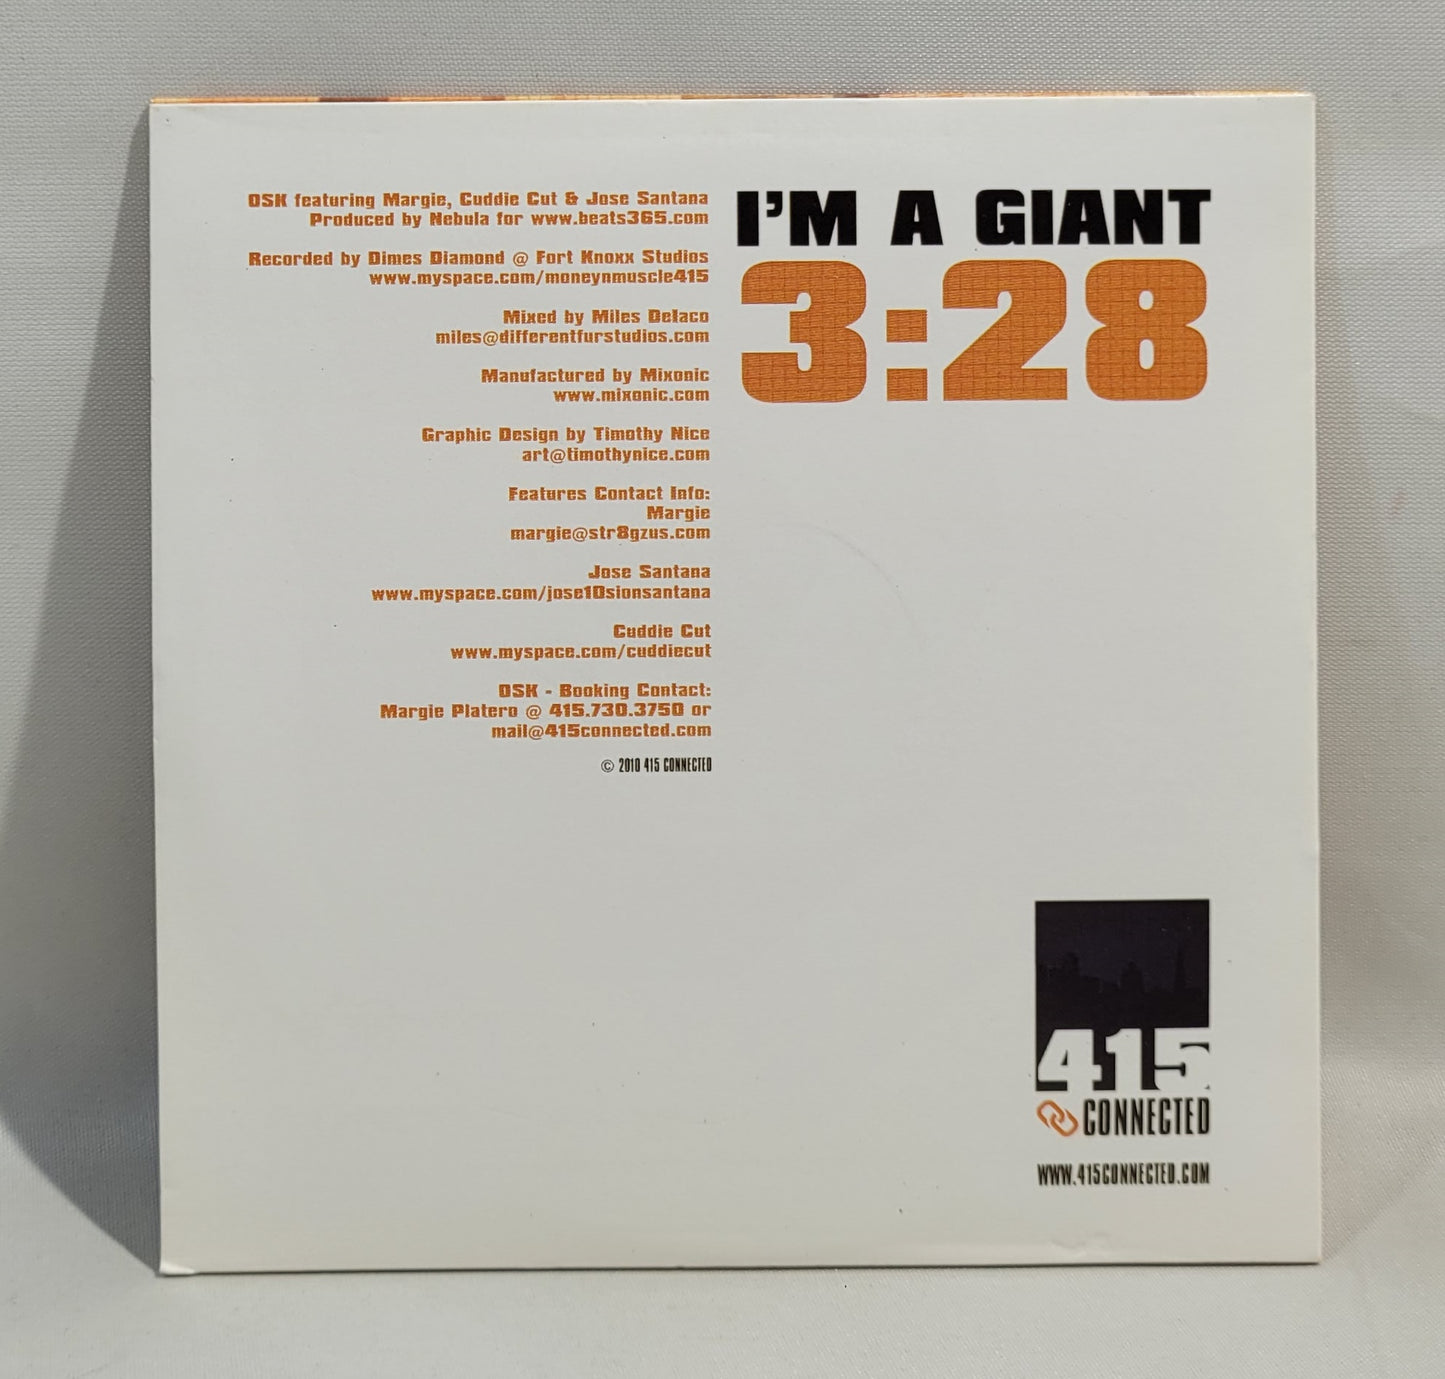 OSK Feat. Margie, Cuddie Cut, Jose Santana- I'm a Giant [CD Single]